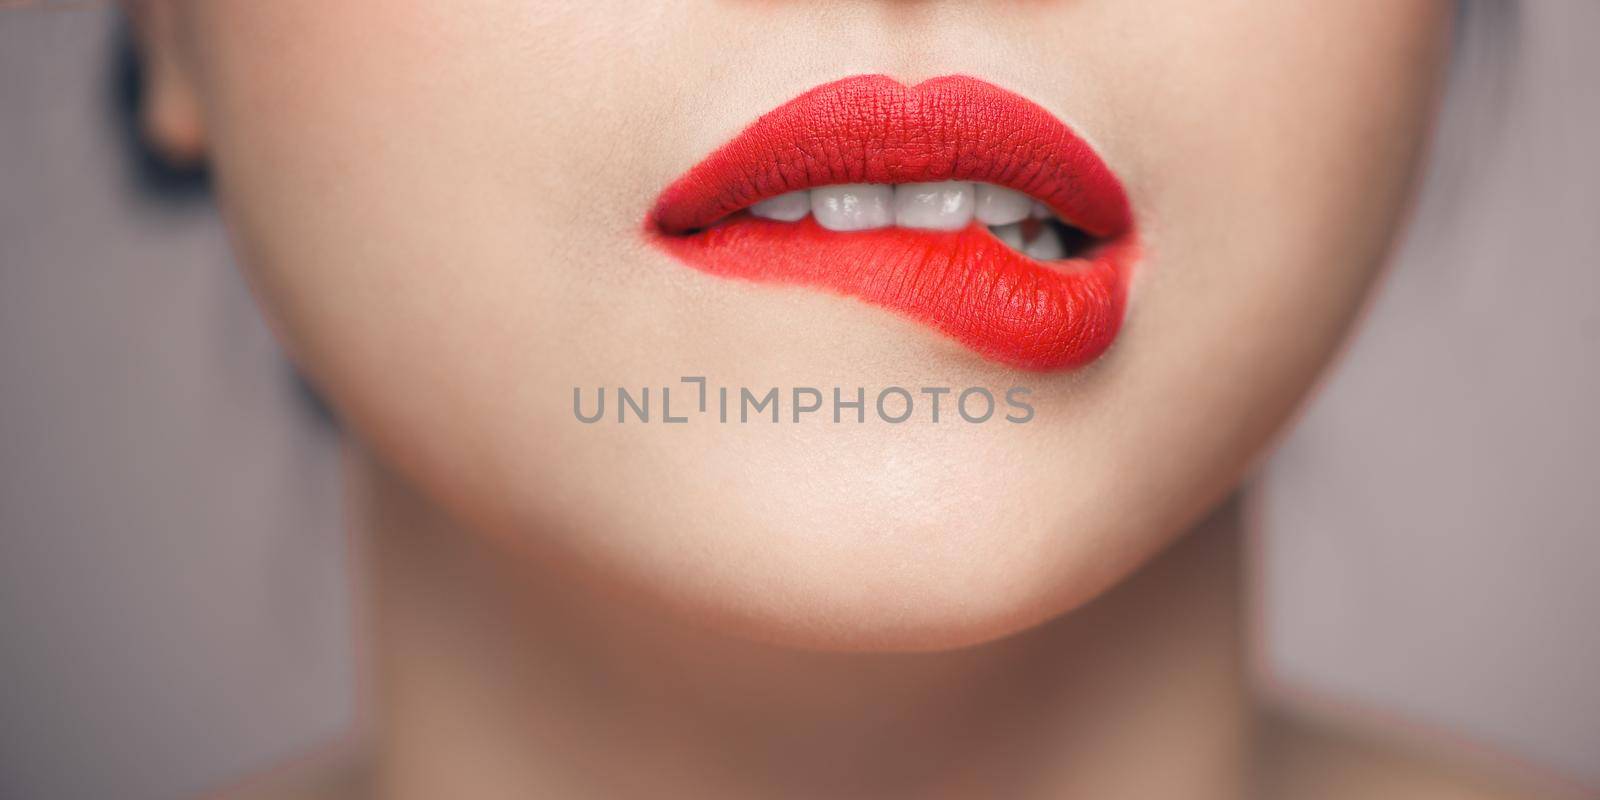  White Teeth Bit her lower Lip, Seductive Lips Red by makidotvn